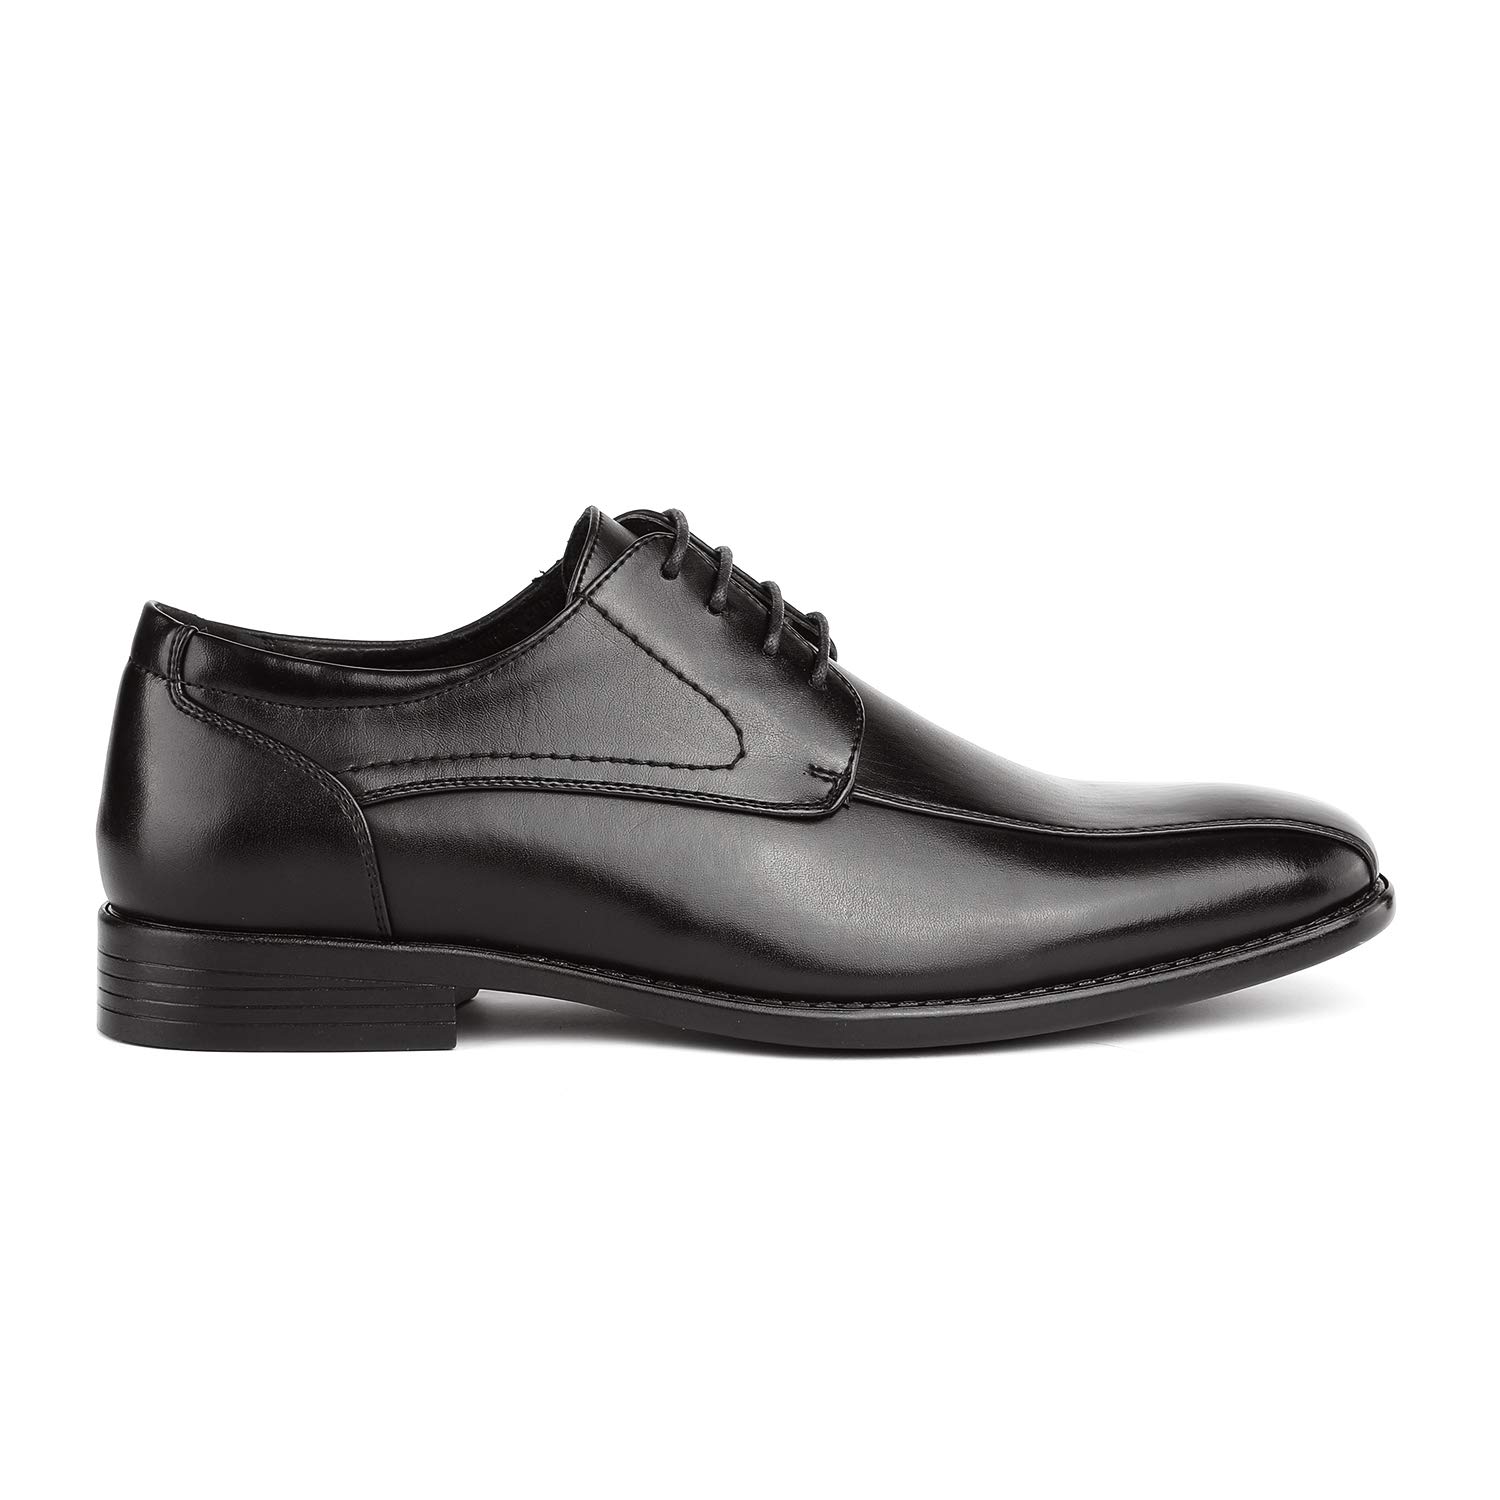 Bruno Marc Men's Dress Shoes Formal Classic Square Toe Lace-up Oxfords Black Size 13 M US DP-03